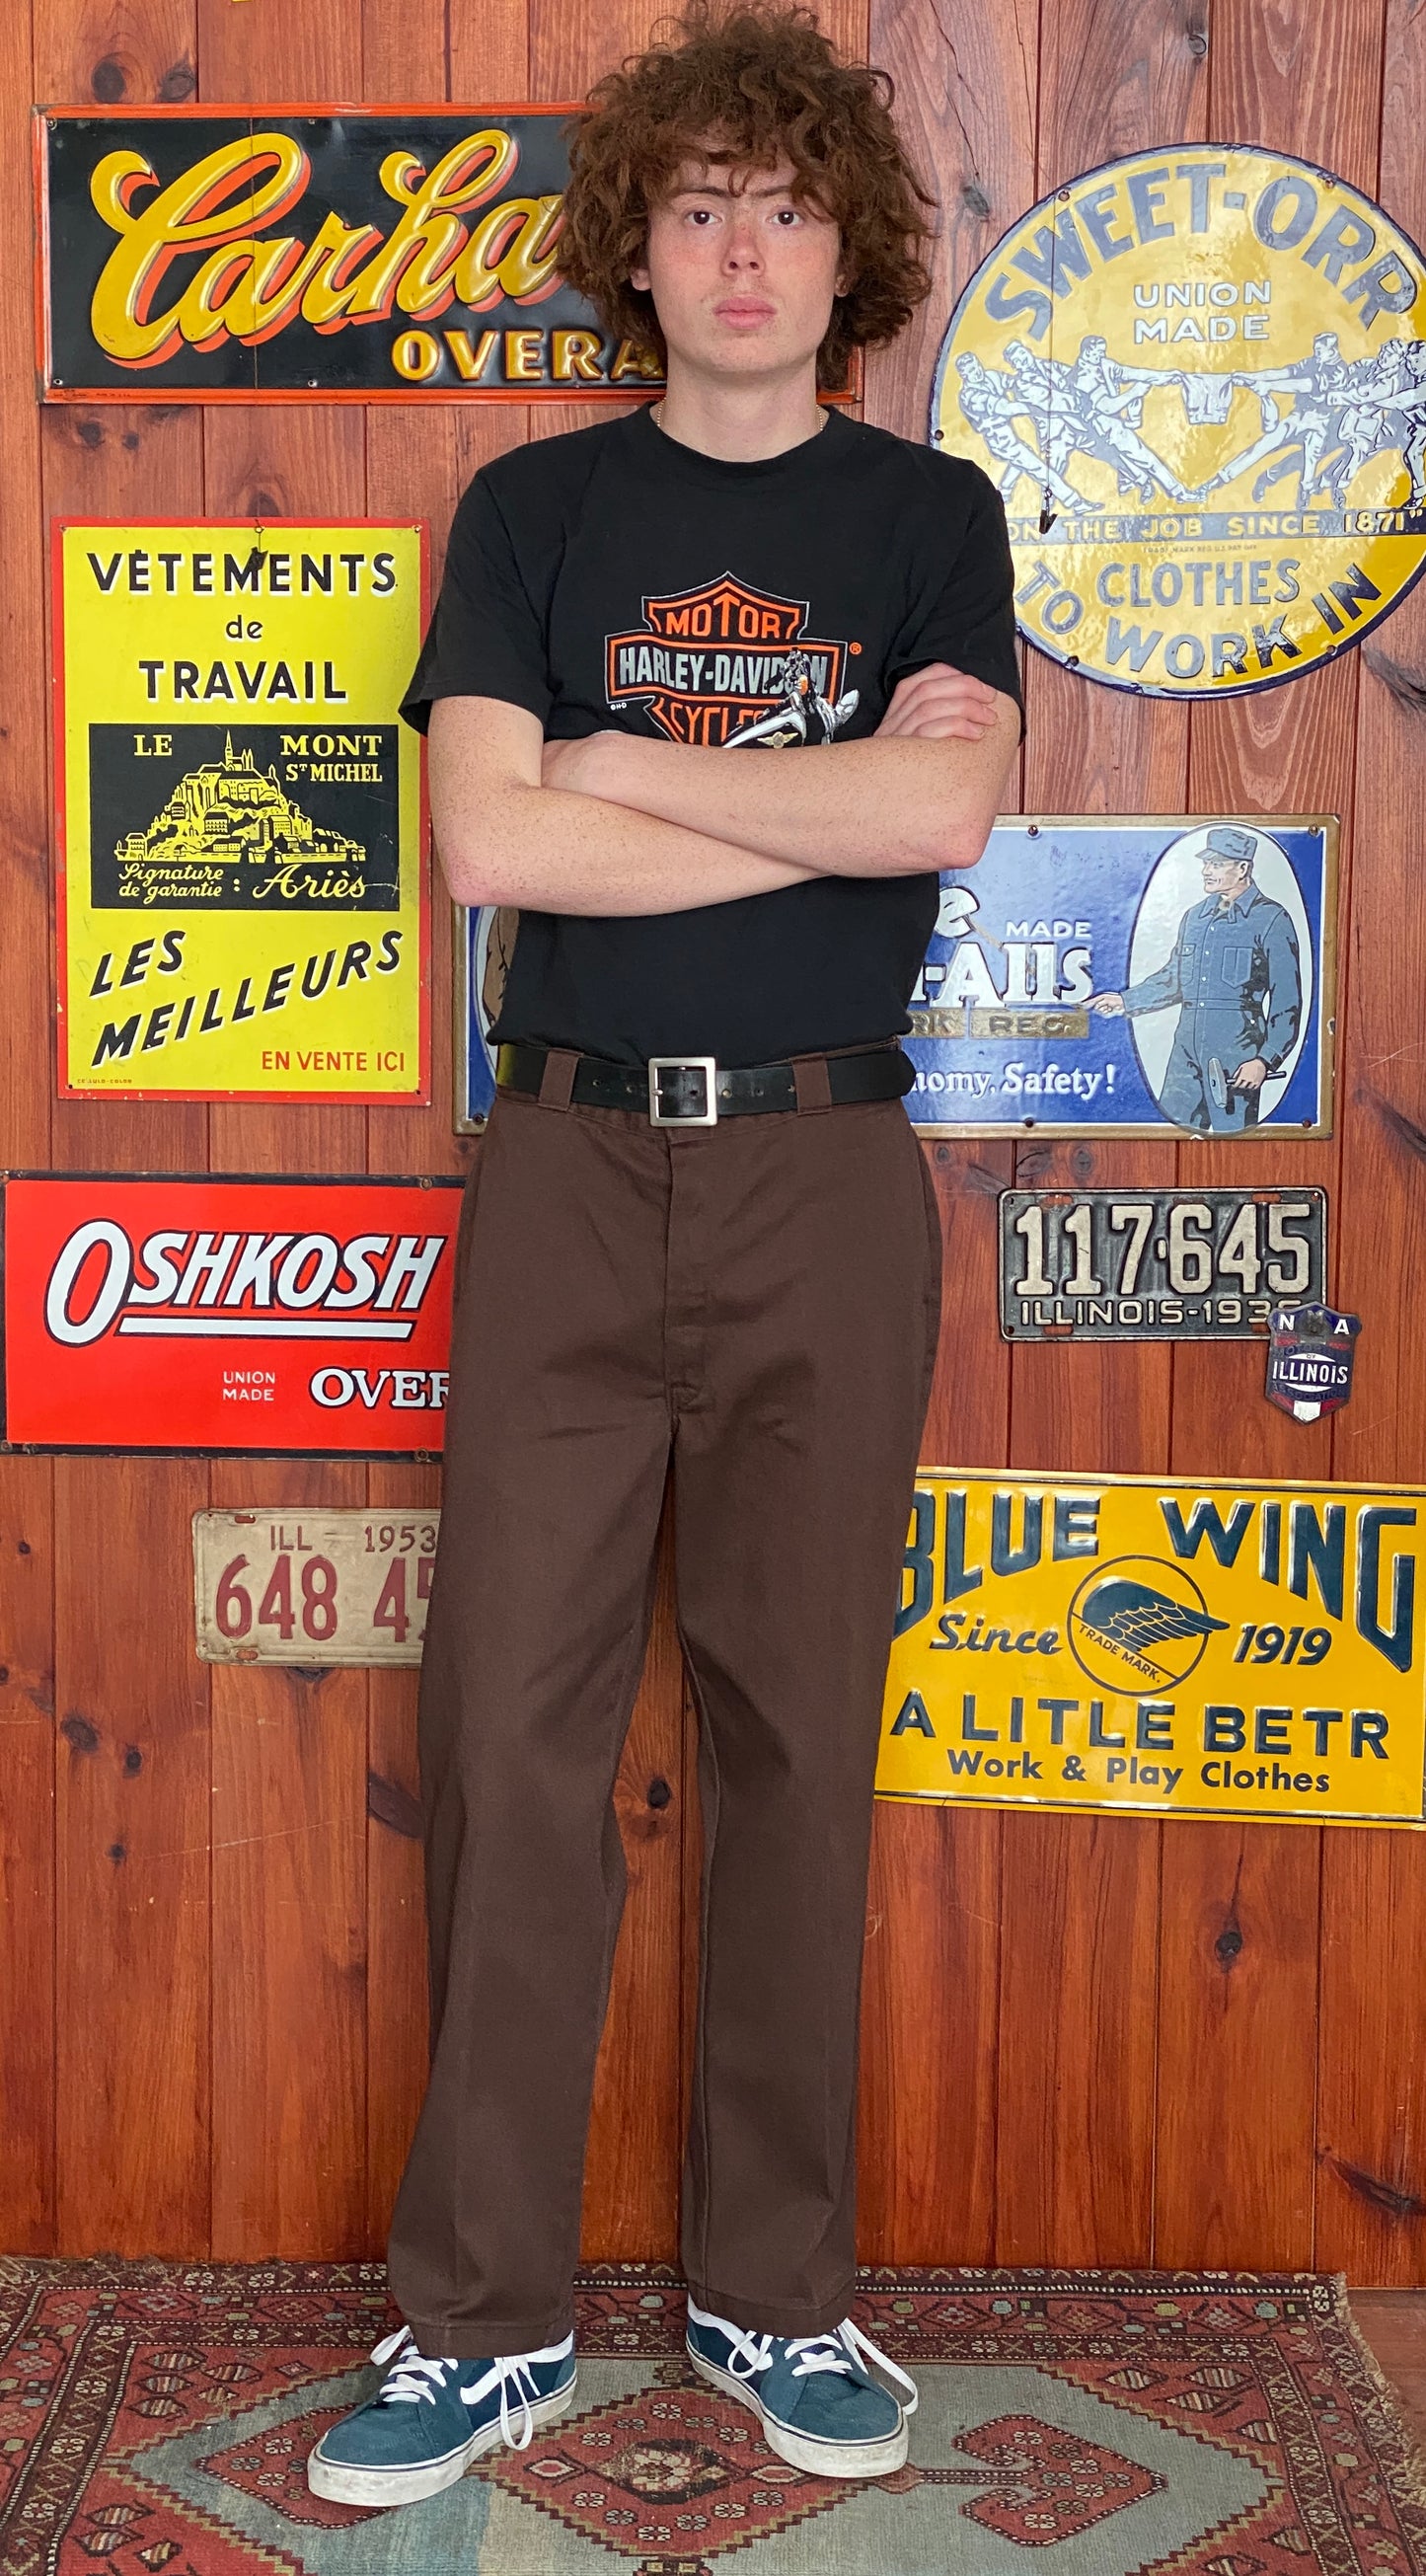 Brown Vintage Dickies Pants Model 874 Size 36X30: Classic Workwear Apparel